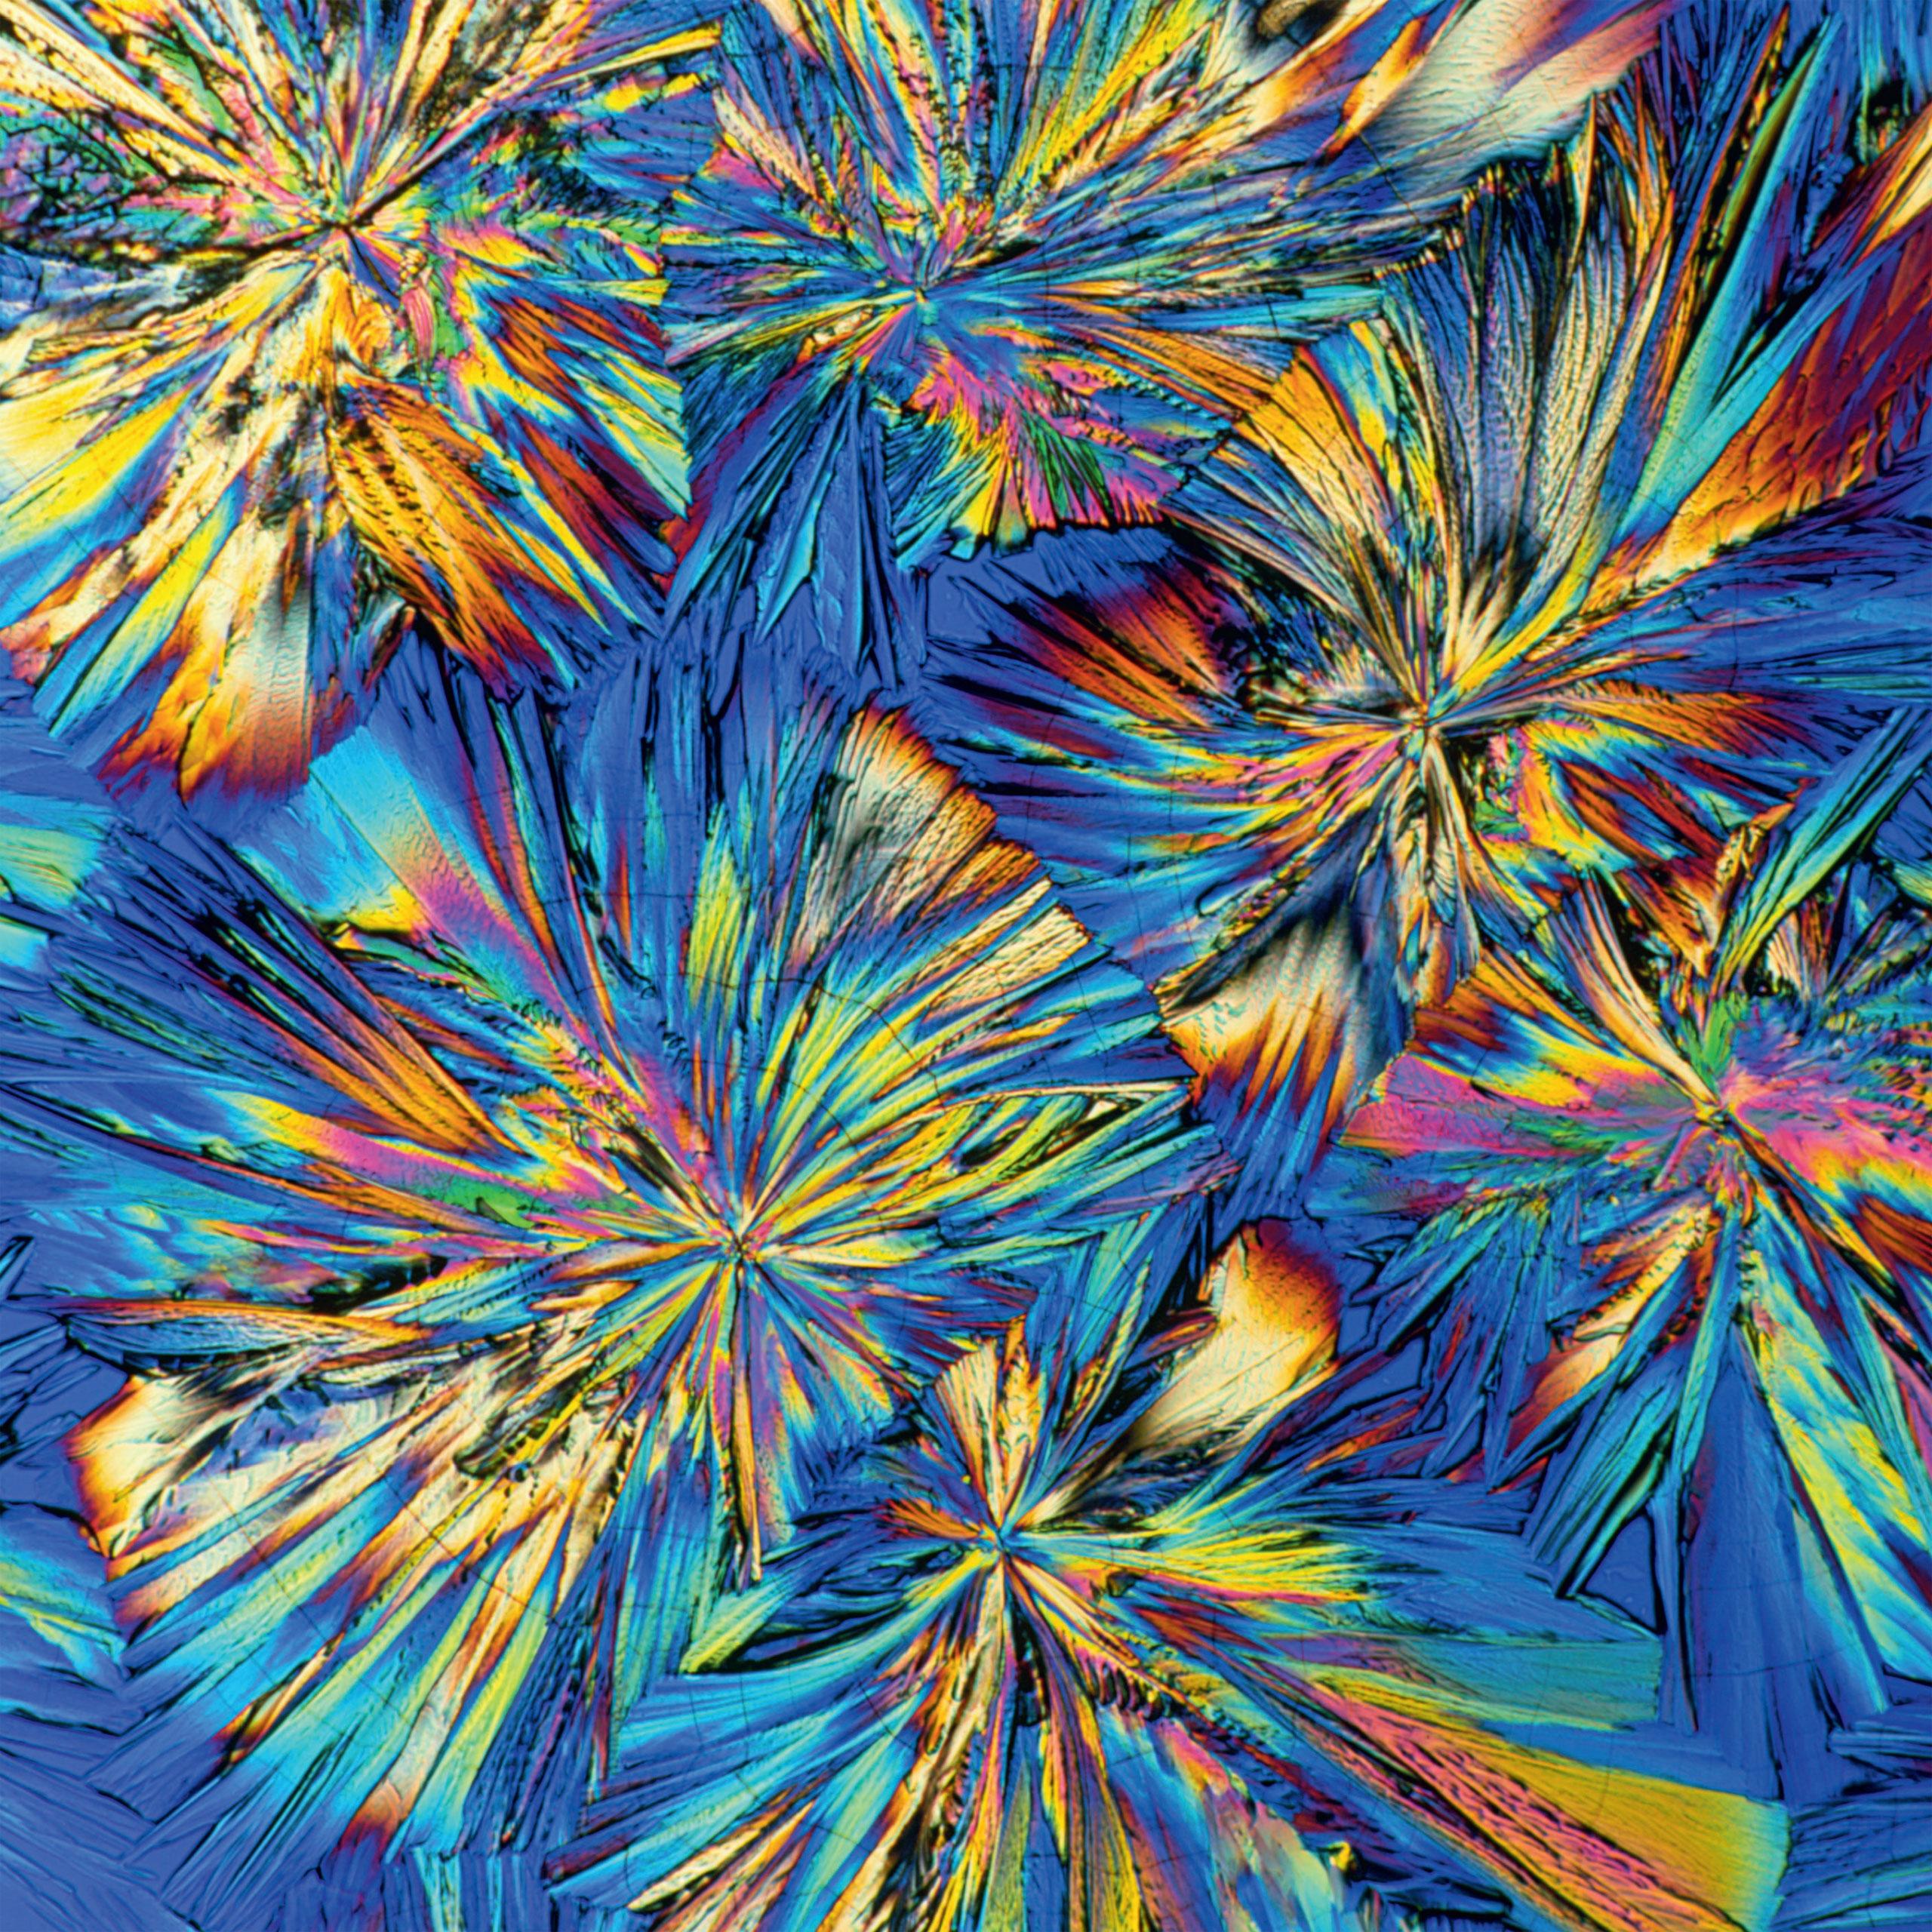 Adrenaline crystals (polarized light micrographs)